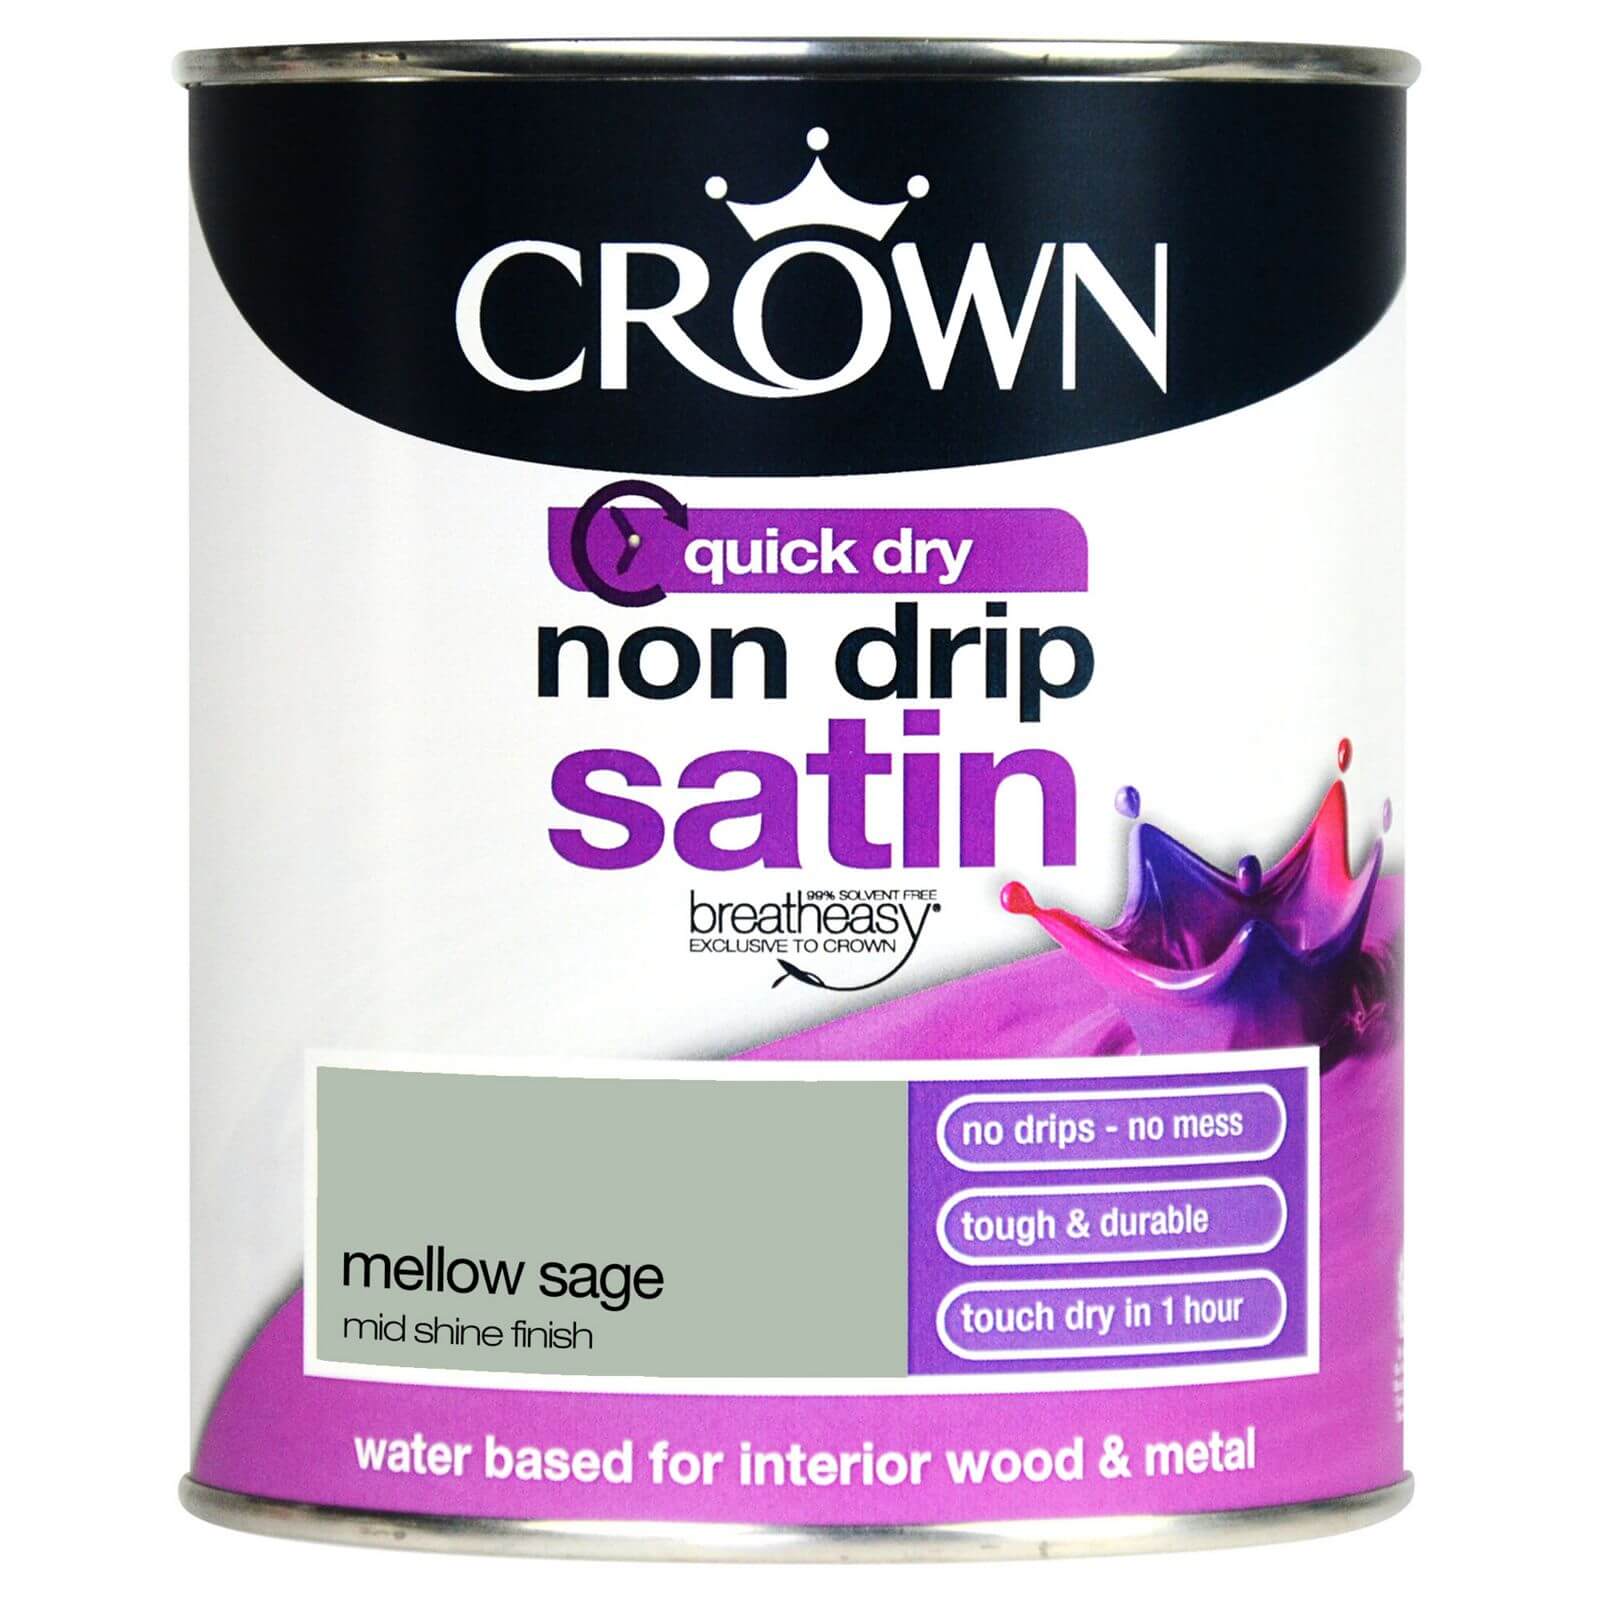 Crown Standard Breatheasy Mellow Sage - Non Drip Satin Paint - 750ml